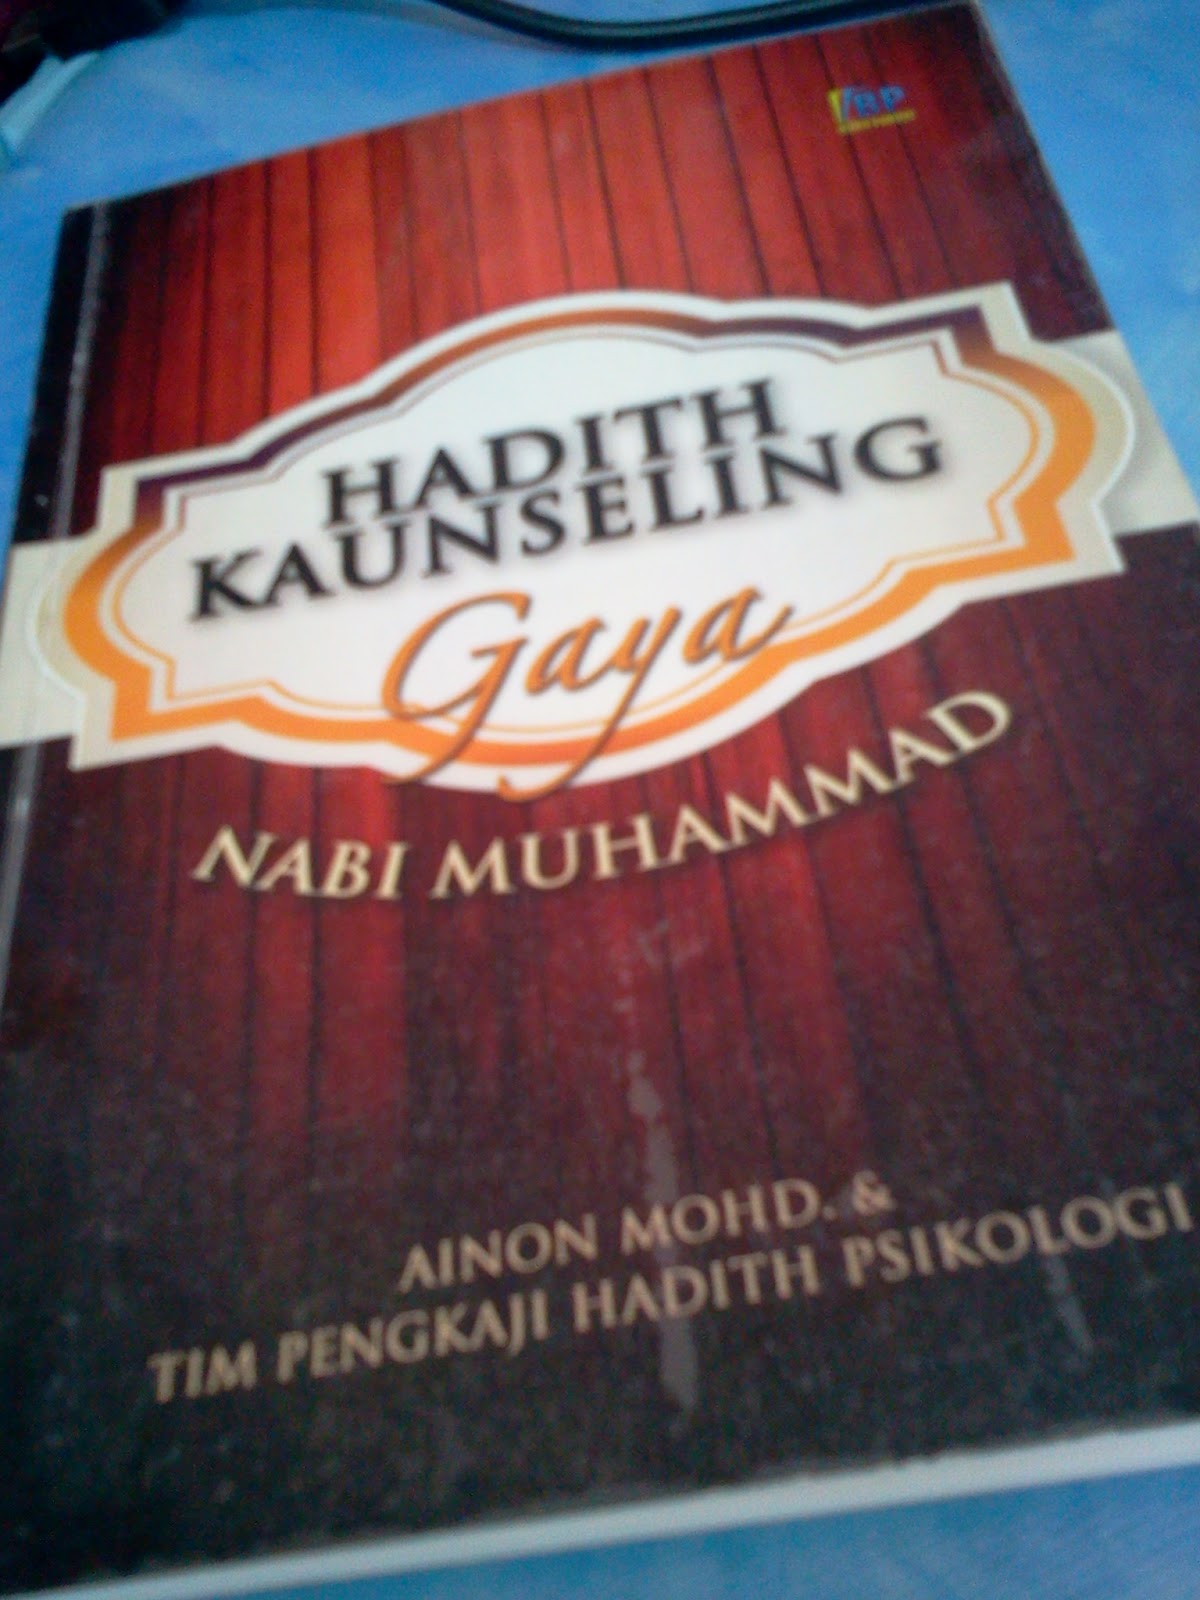 my simple life story Kaunseling Gaya  Nabi  Muhammad 